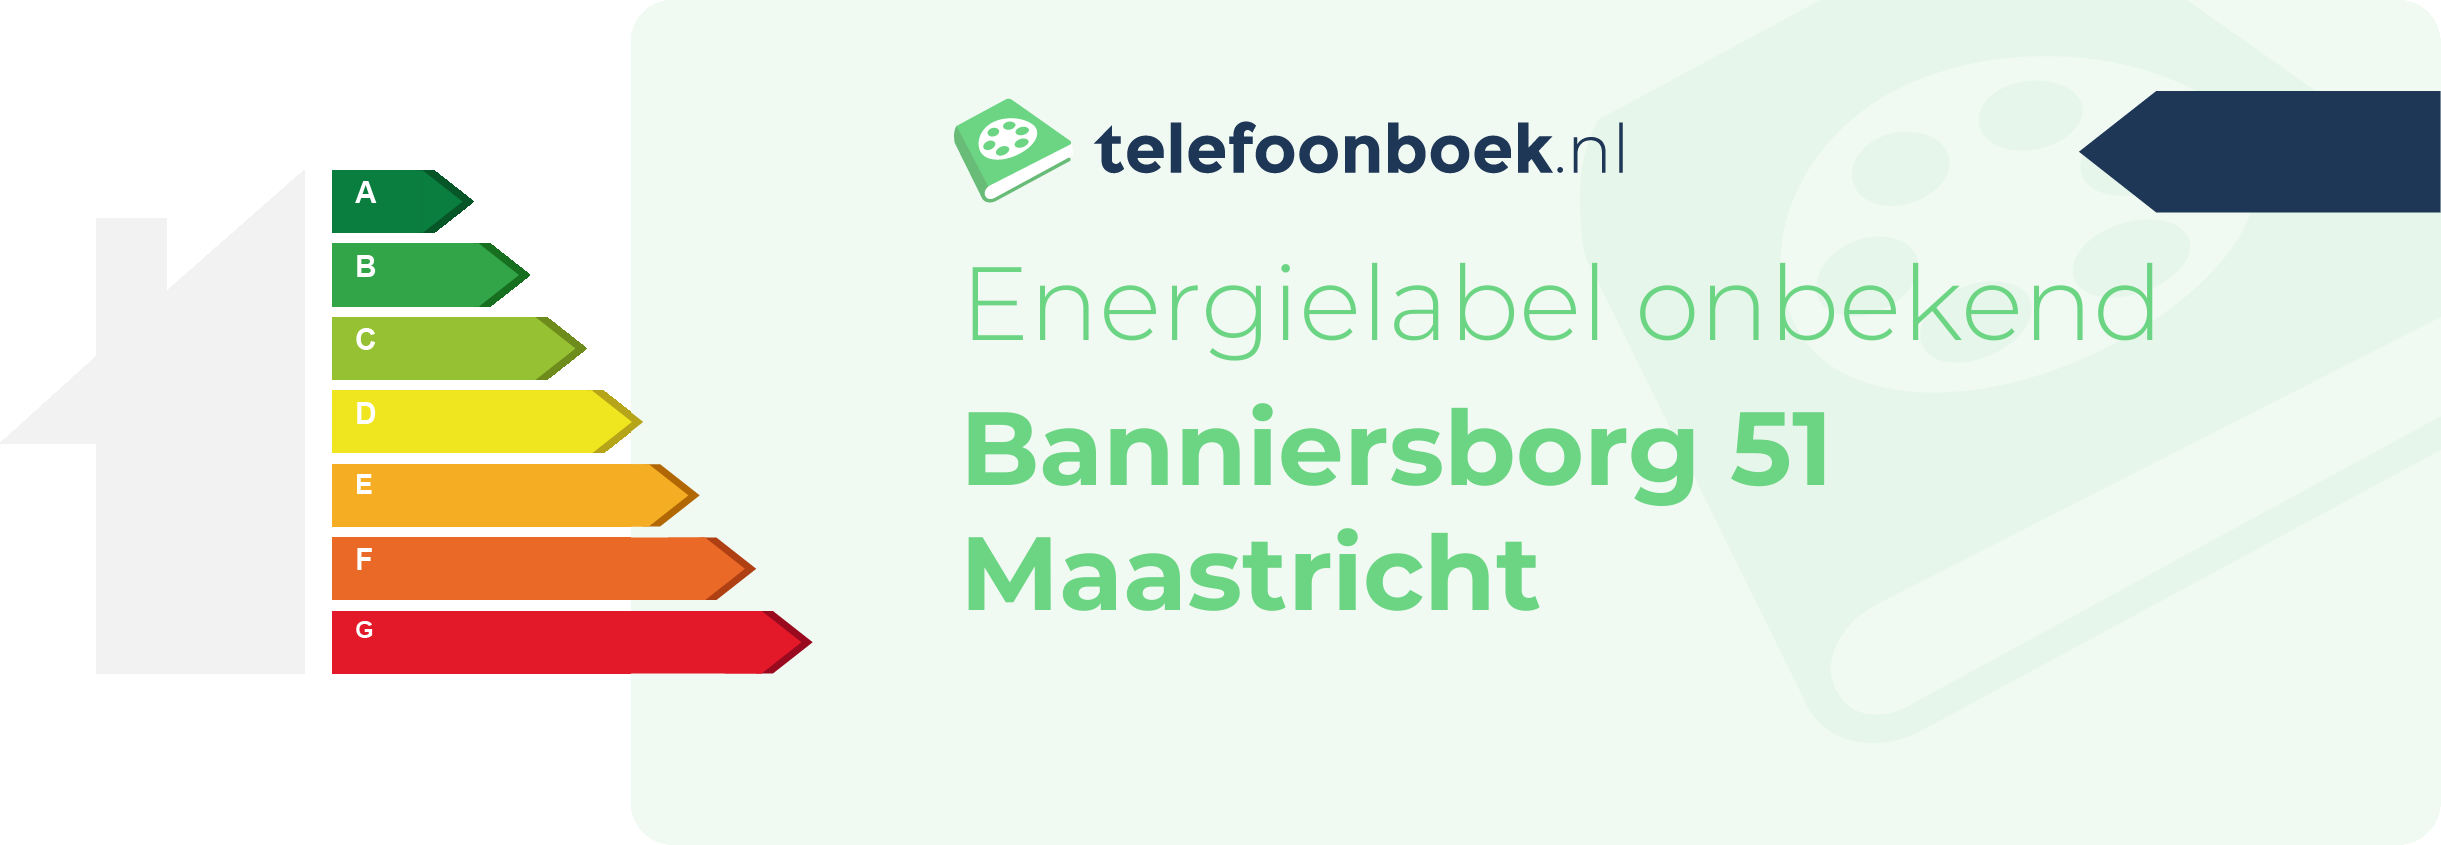 Energielabel Banniersborg 51 Maastricht